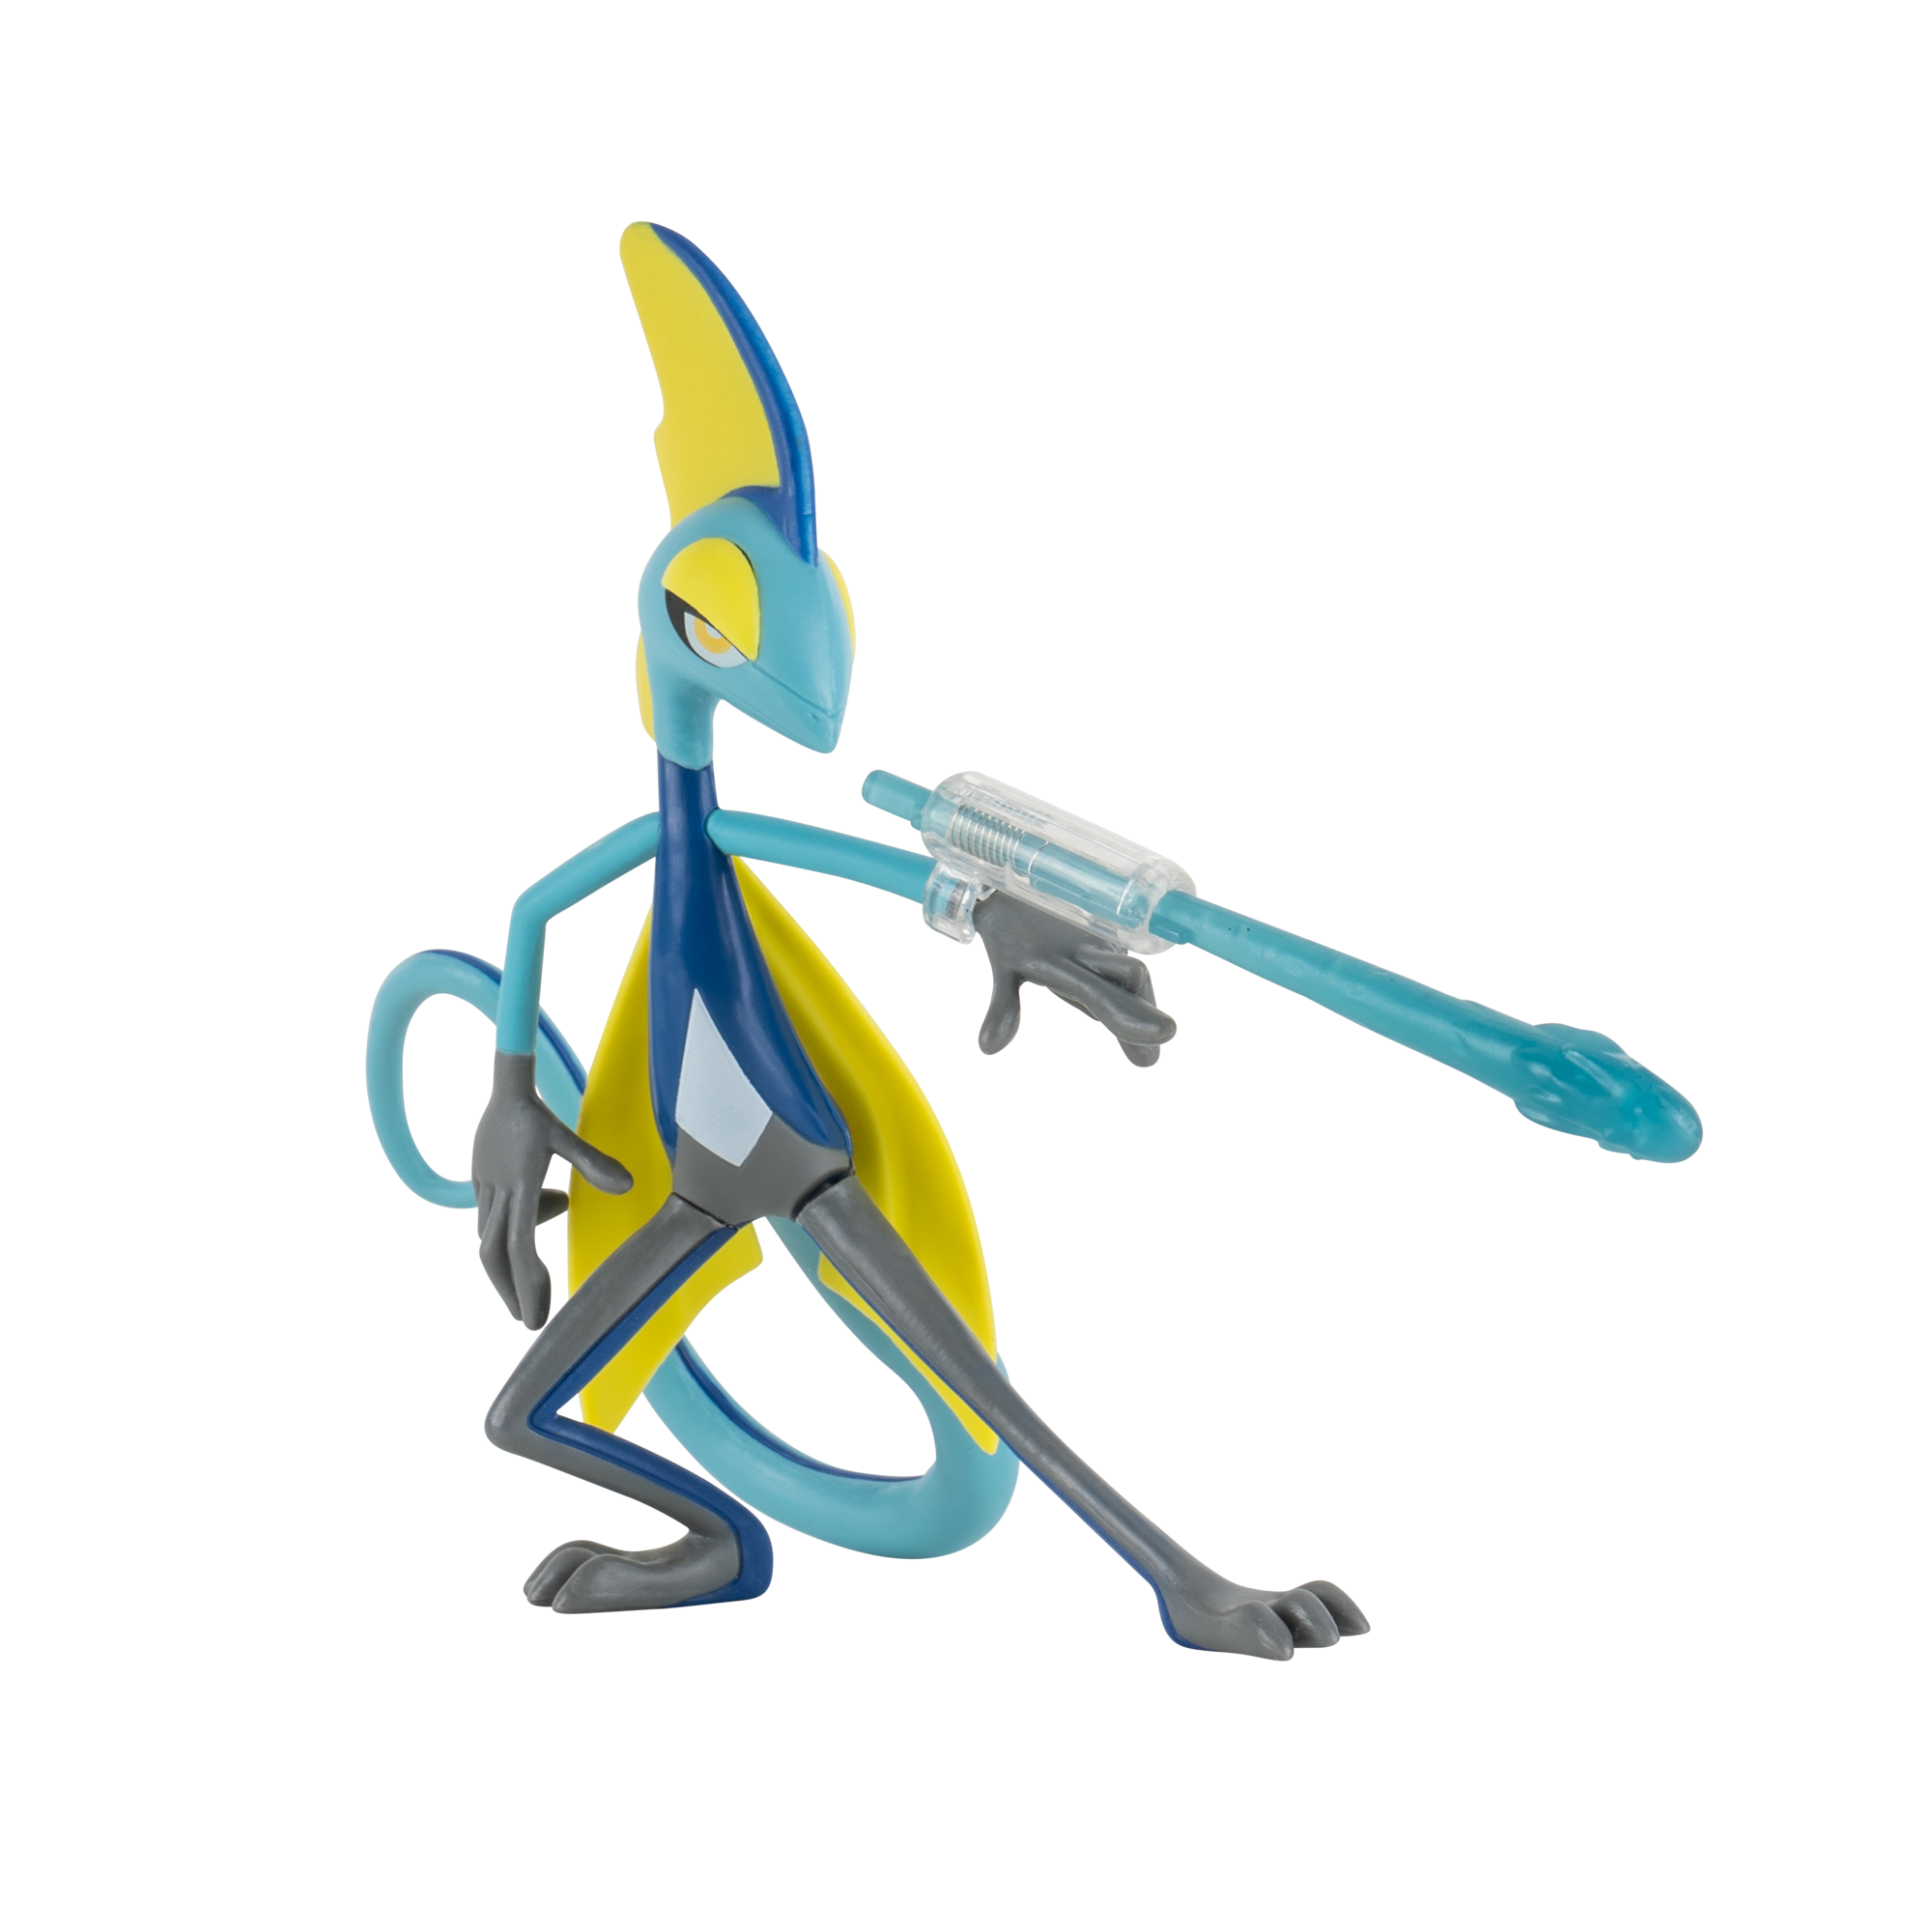 Pokémon - Battle Feature Figure - Inteleon (PKW0165)